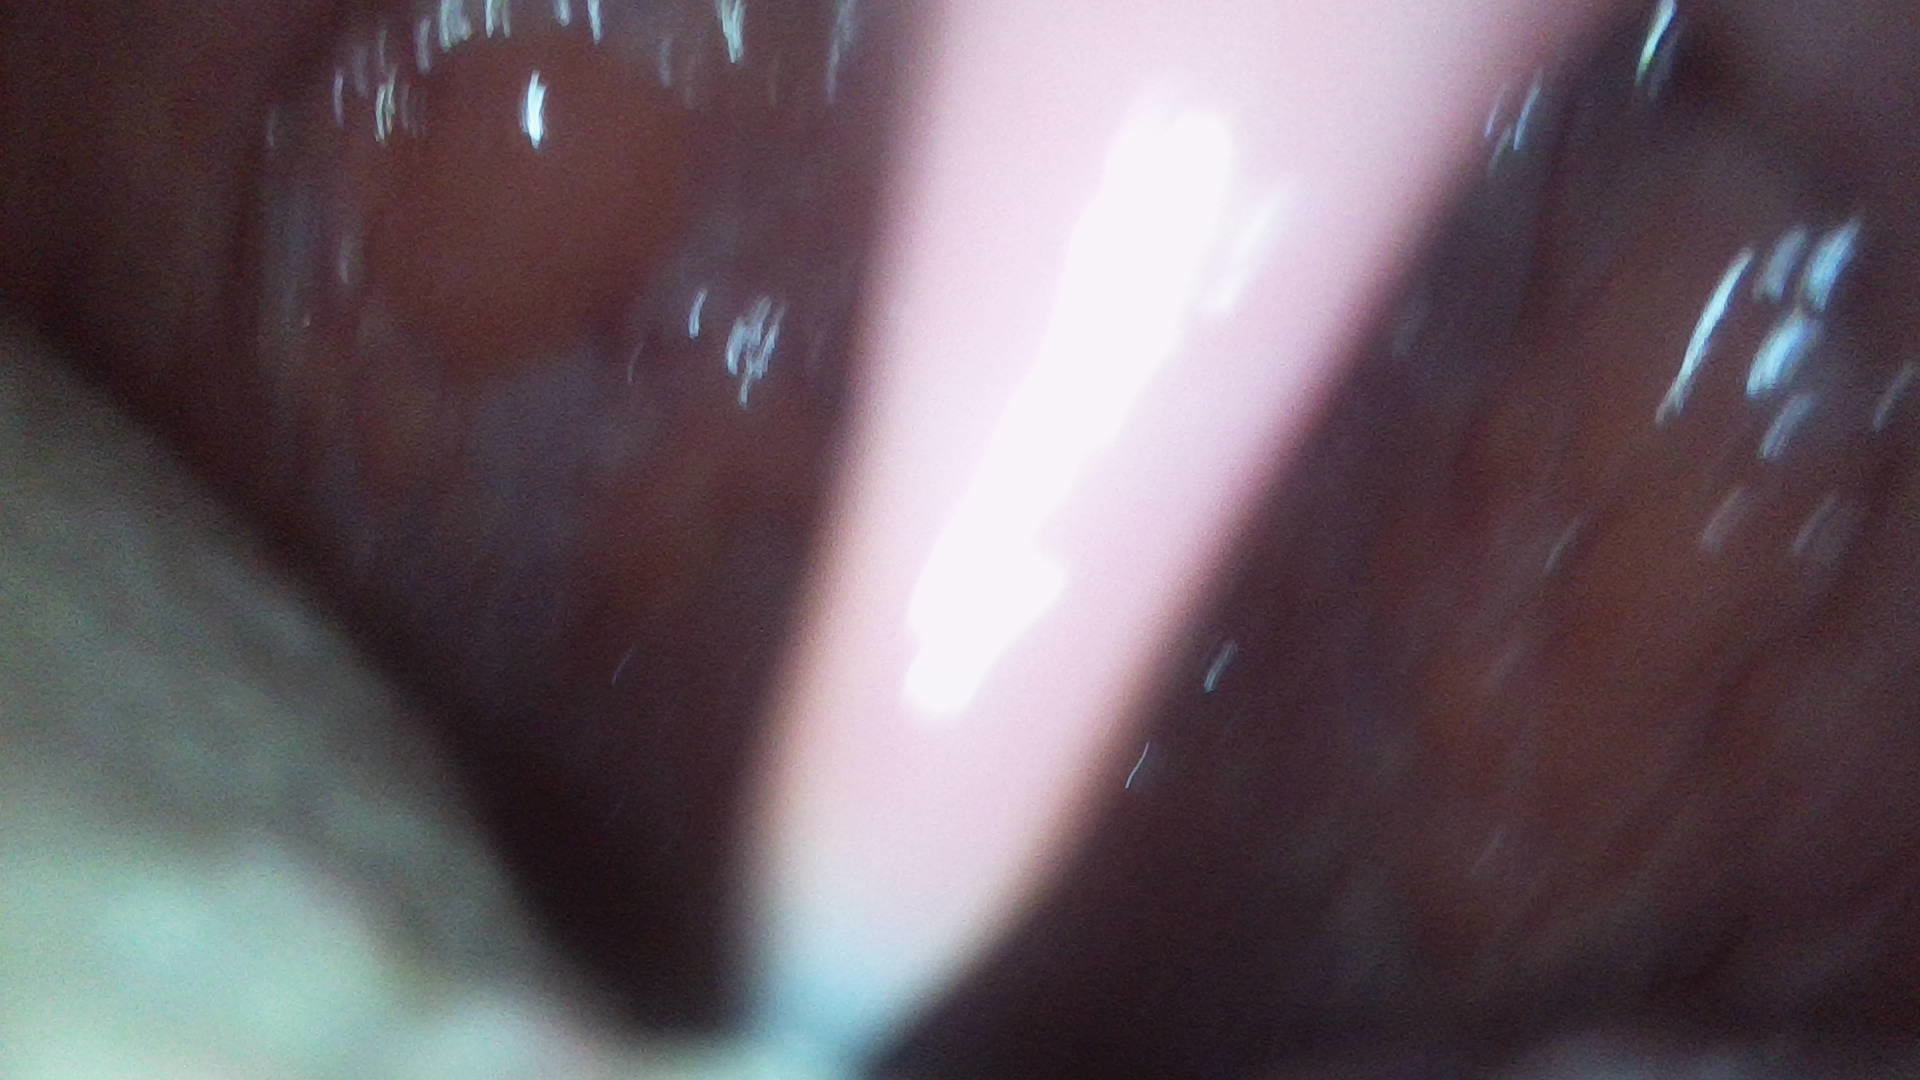 Mouth tour endoscope view